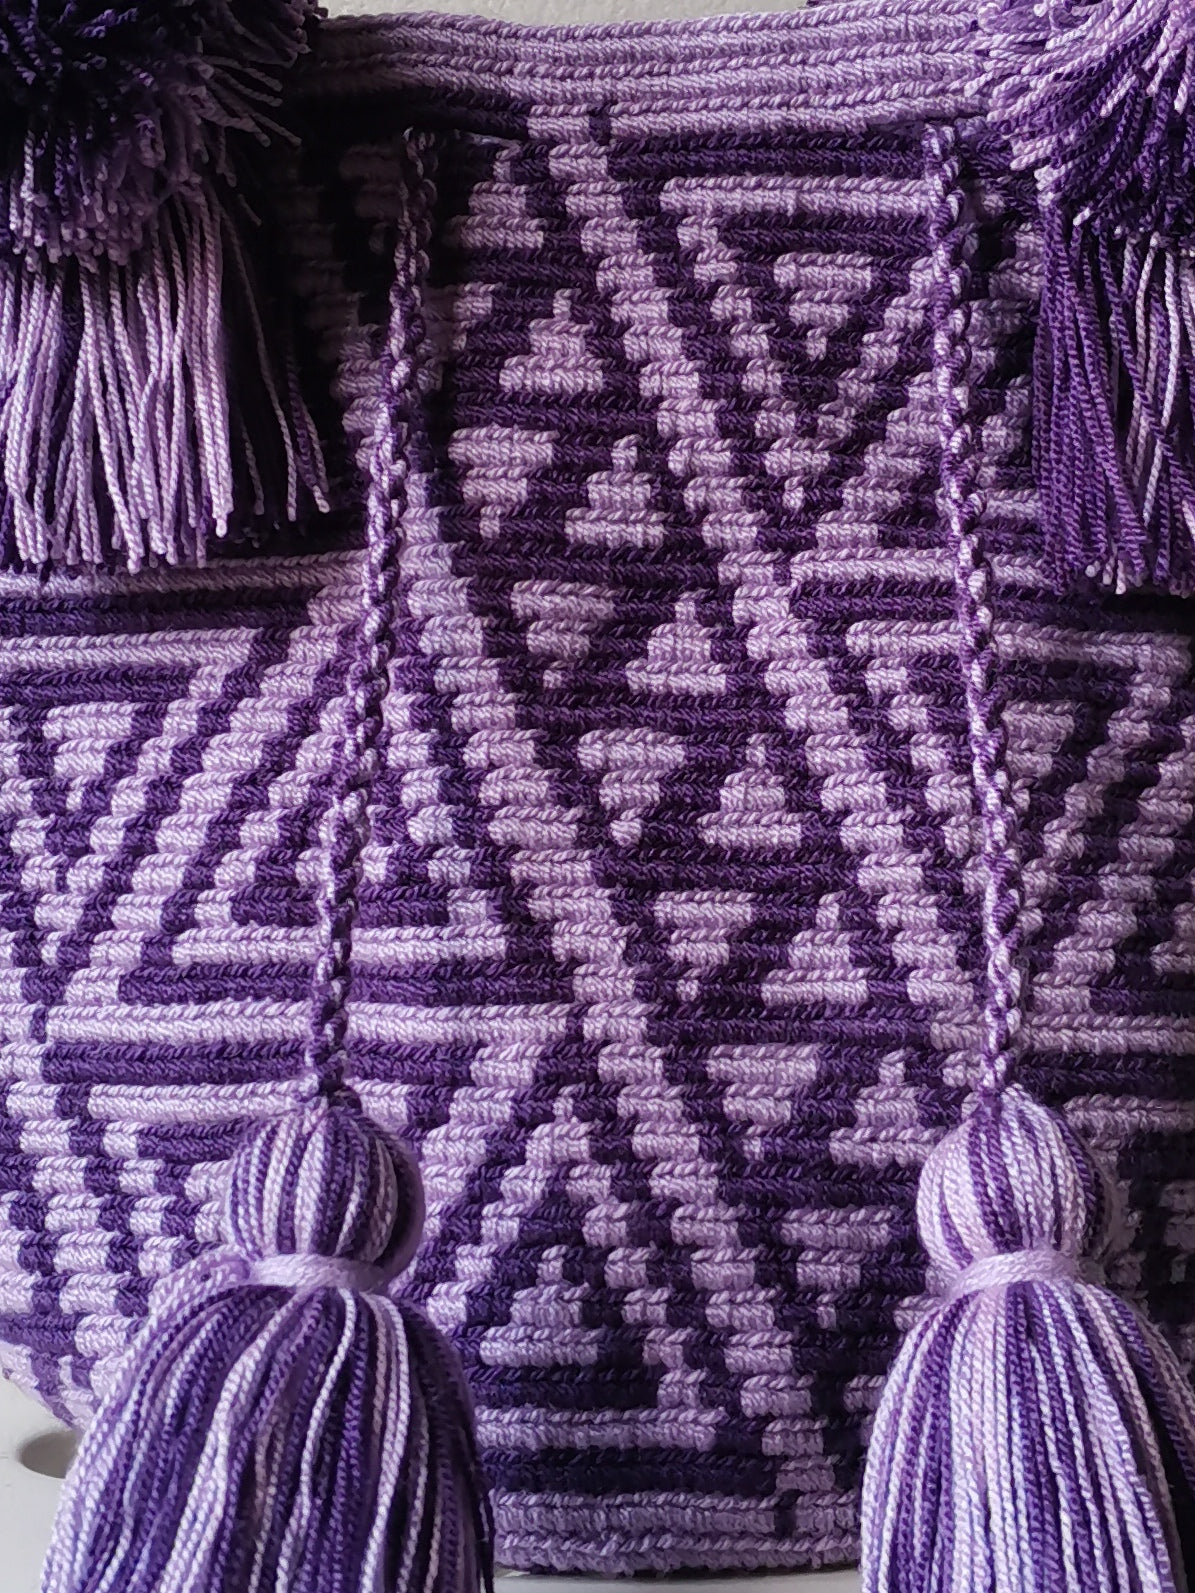 M lilac and purple mochila handbag